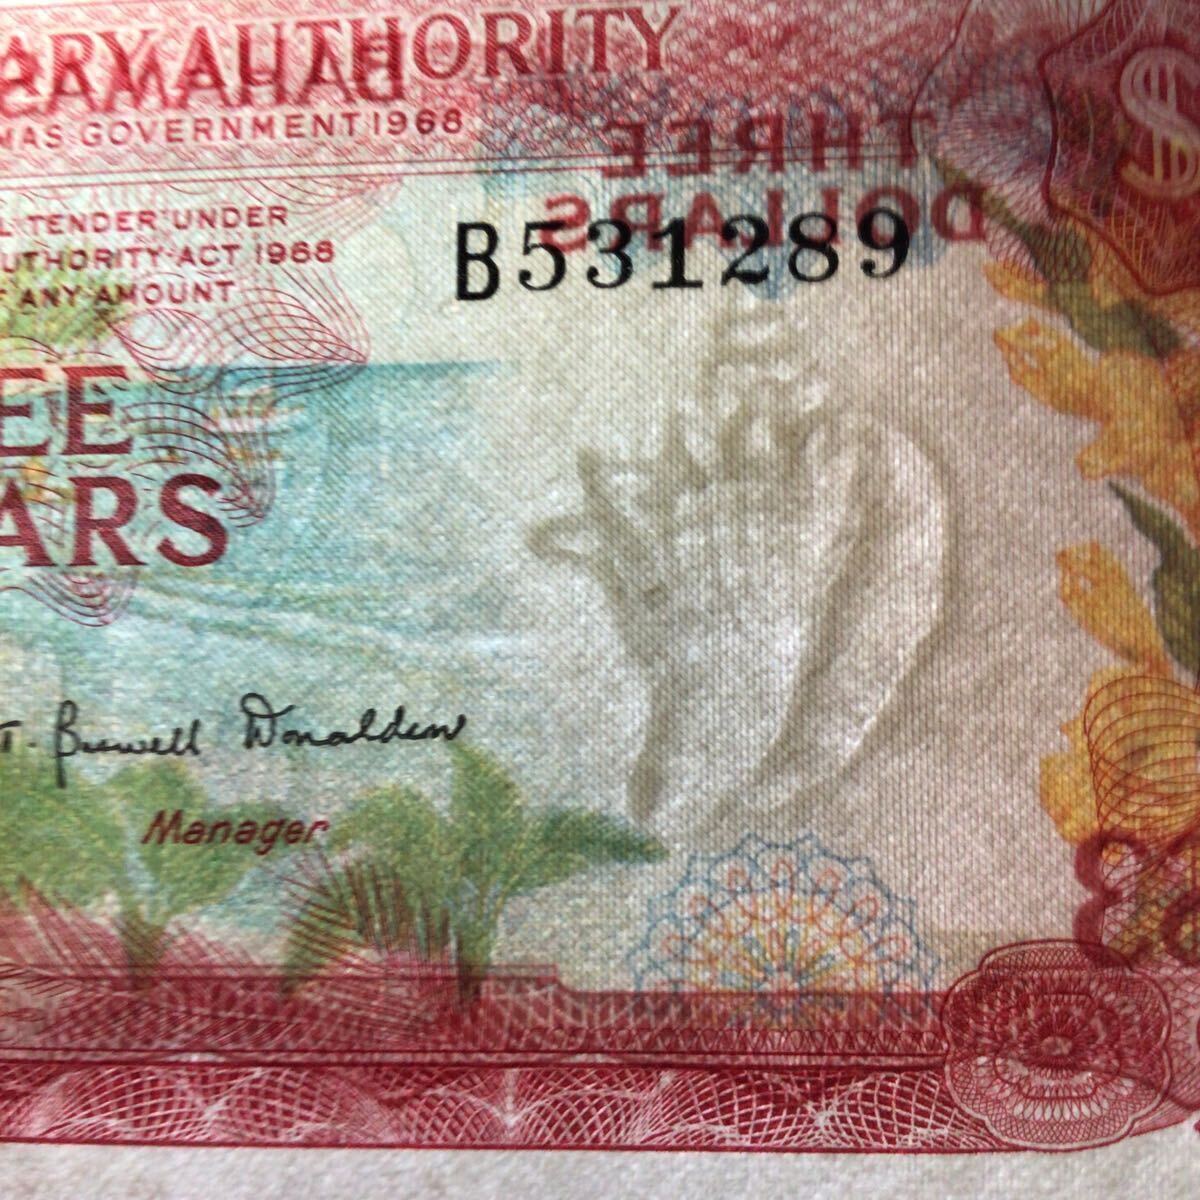 World Banknote Grading BAHAMAS《Monetary Authority》 3 Dollars【1968】『PMG Grading Gem Uncirculated 66 EPQ』_画像3